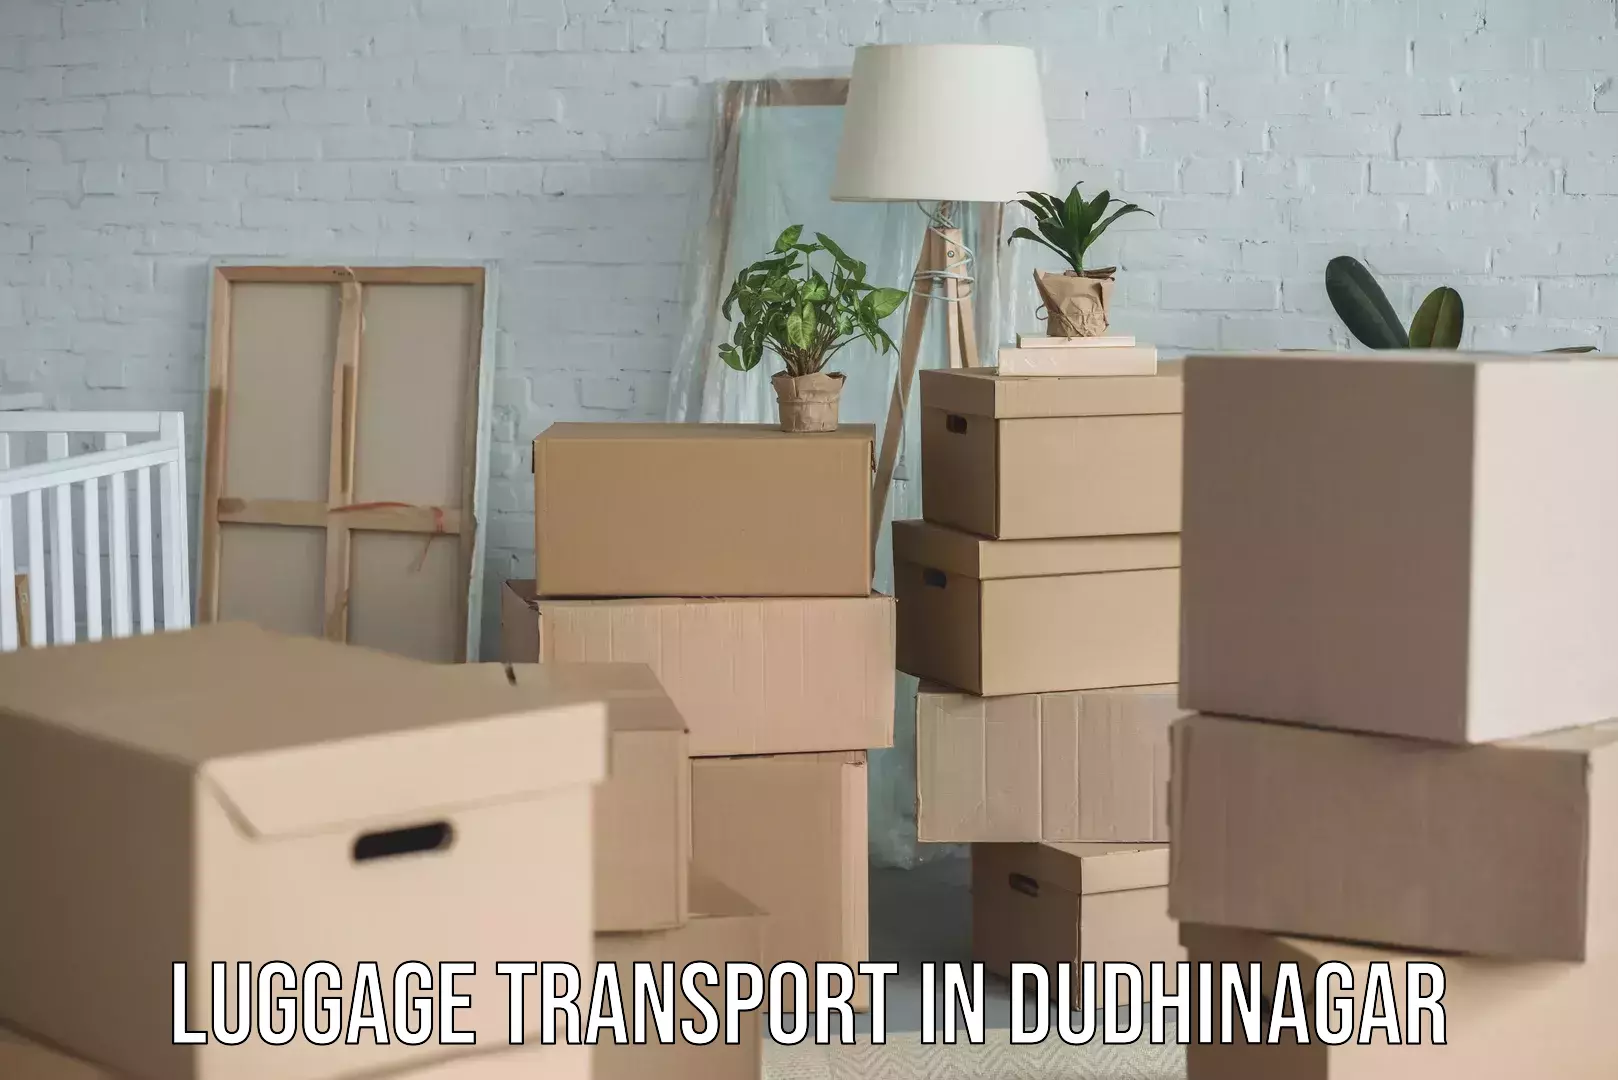 Doorstep luggage collection in Dudhinagar